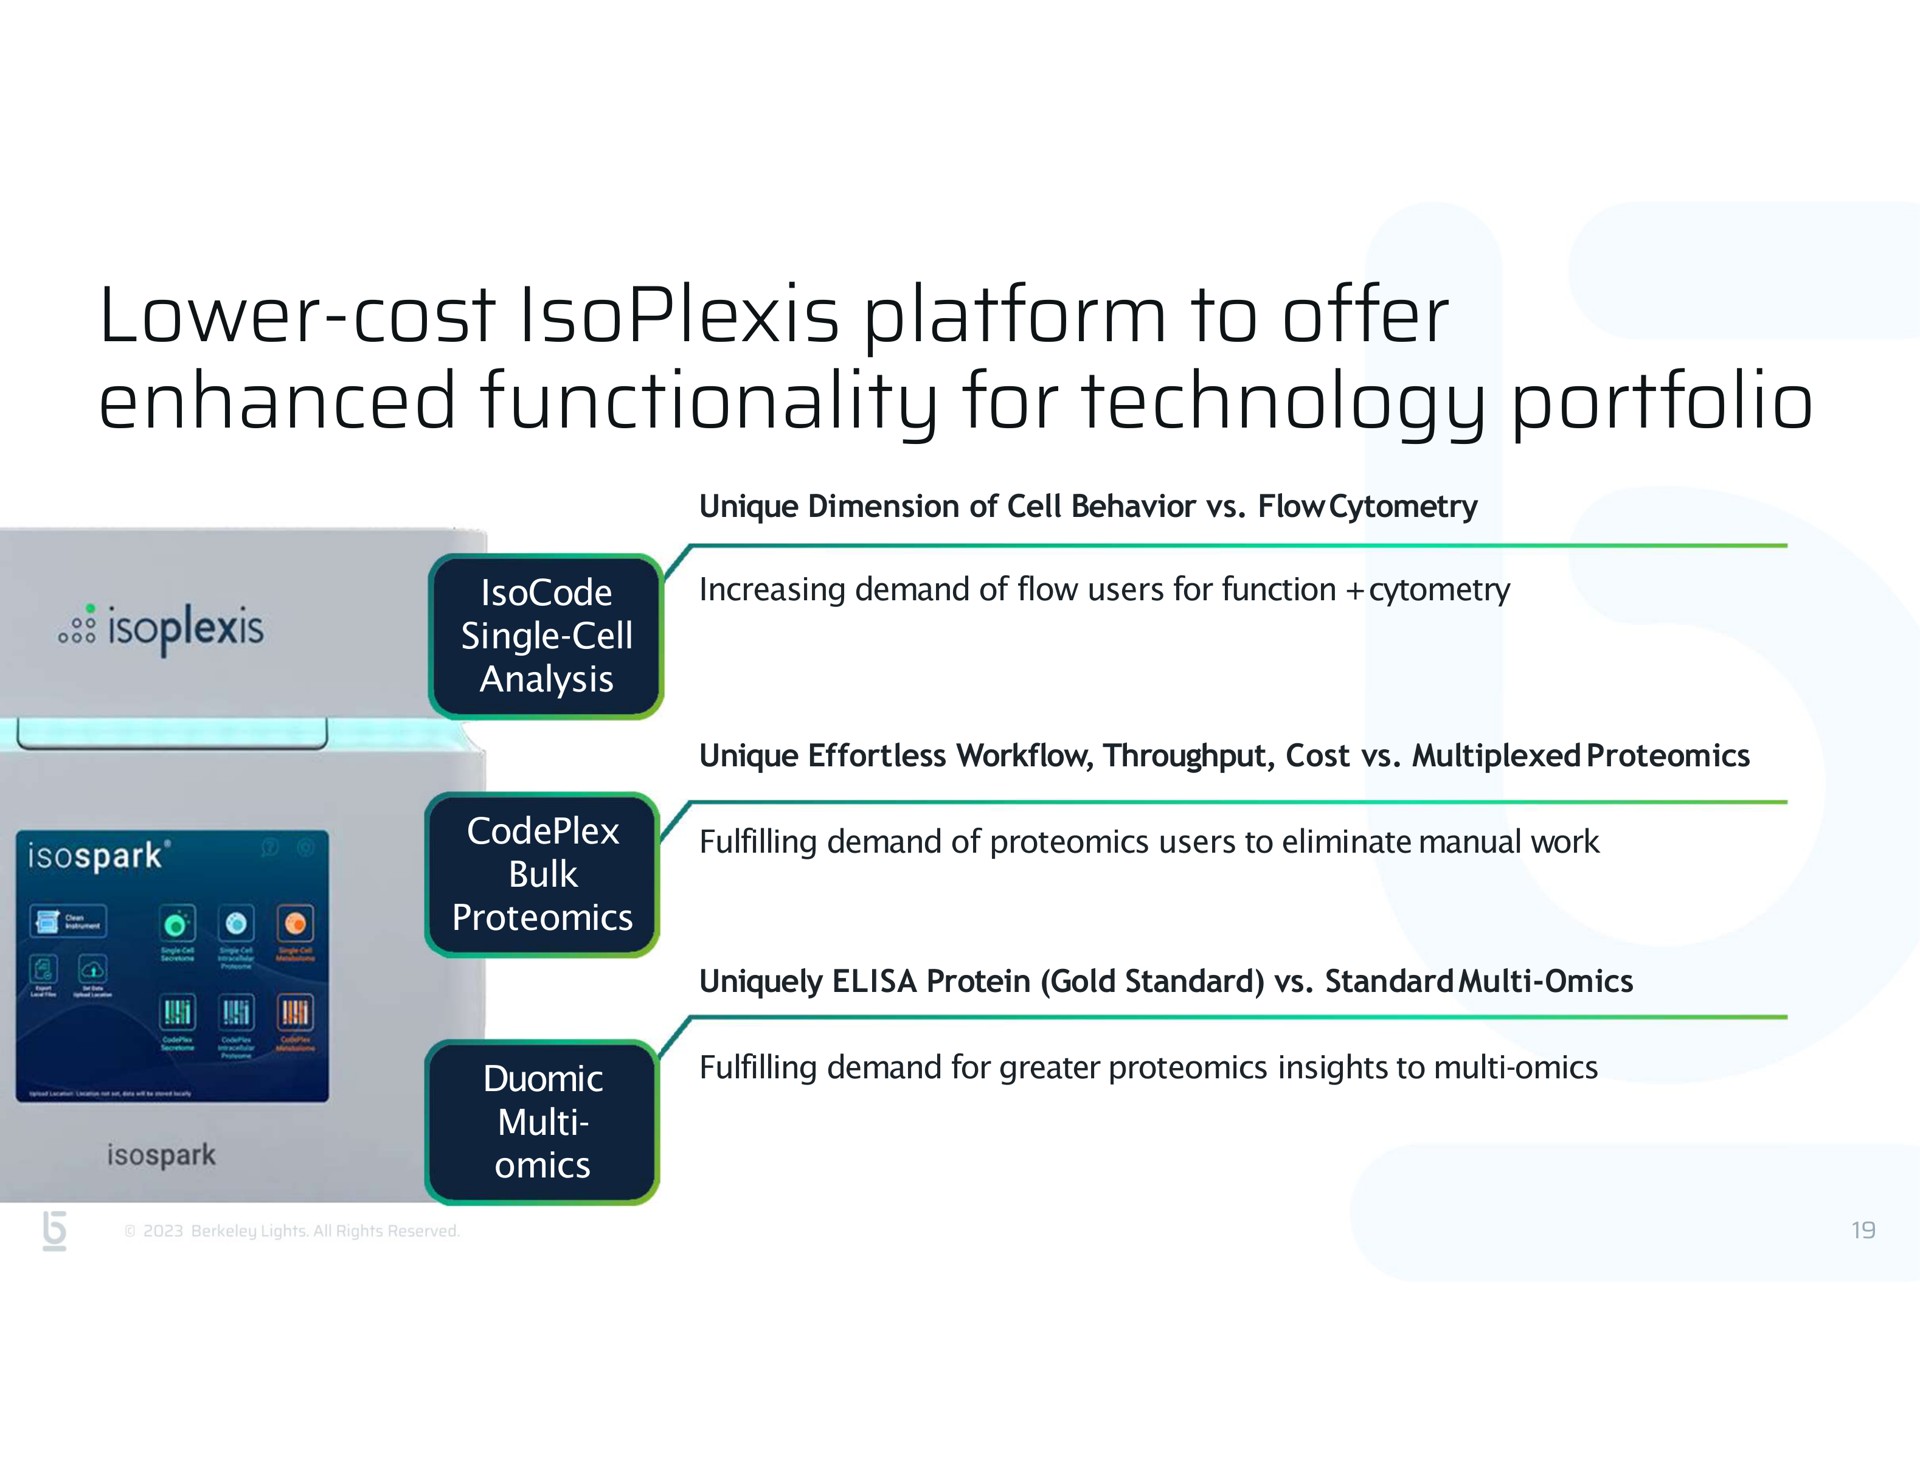 lower cost platform to offer enhanced functionality for technology portfolio | Berkeley Lights